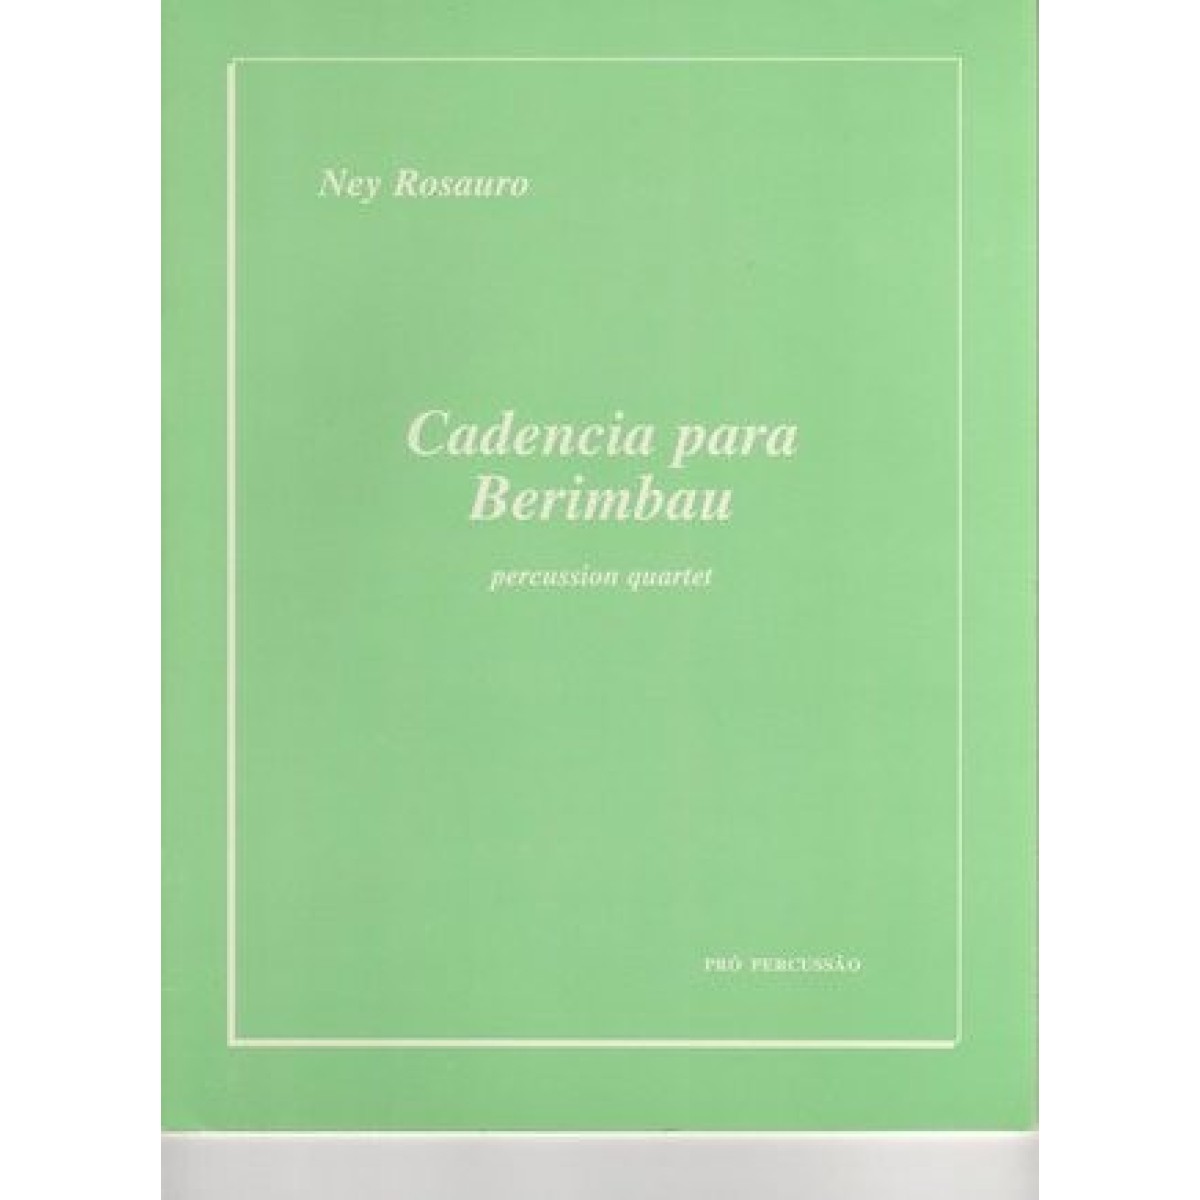 Cadencia Para Berimbau by Ney Rosauro